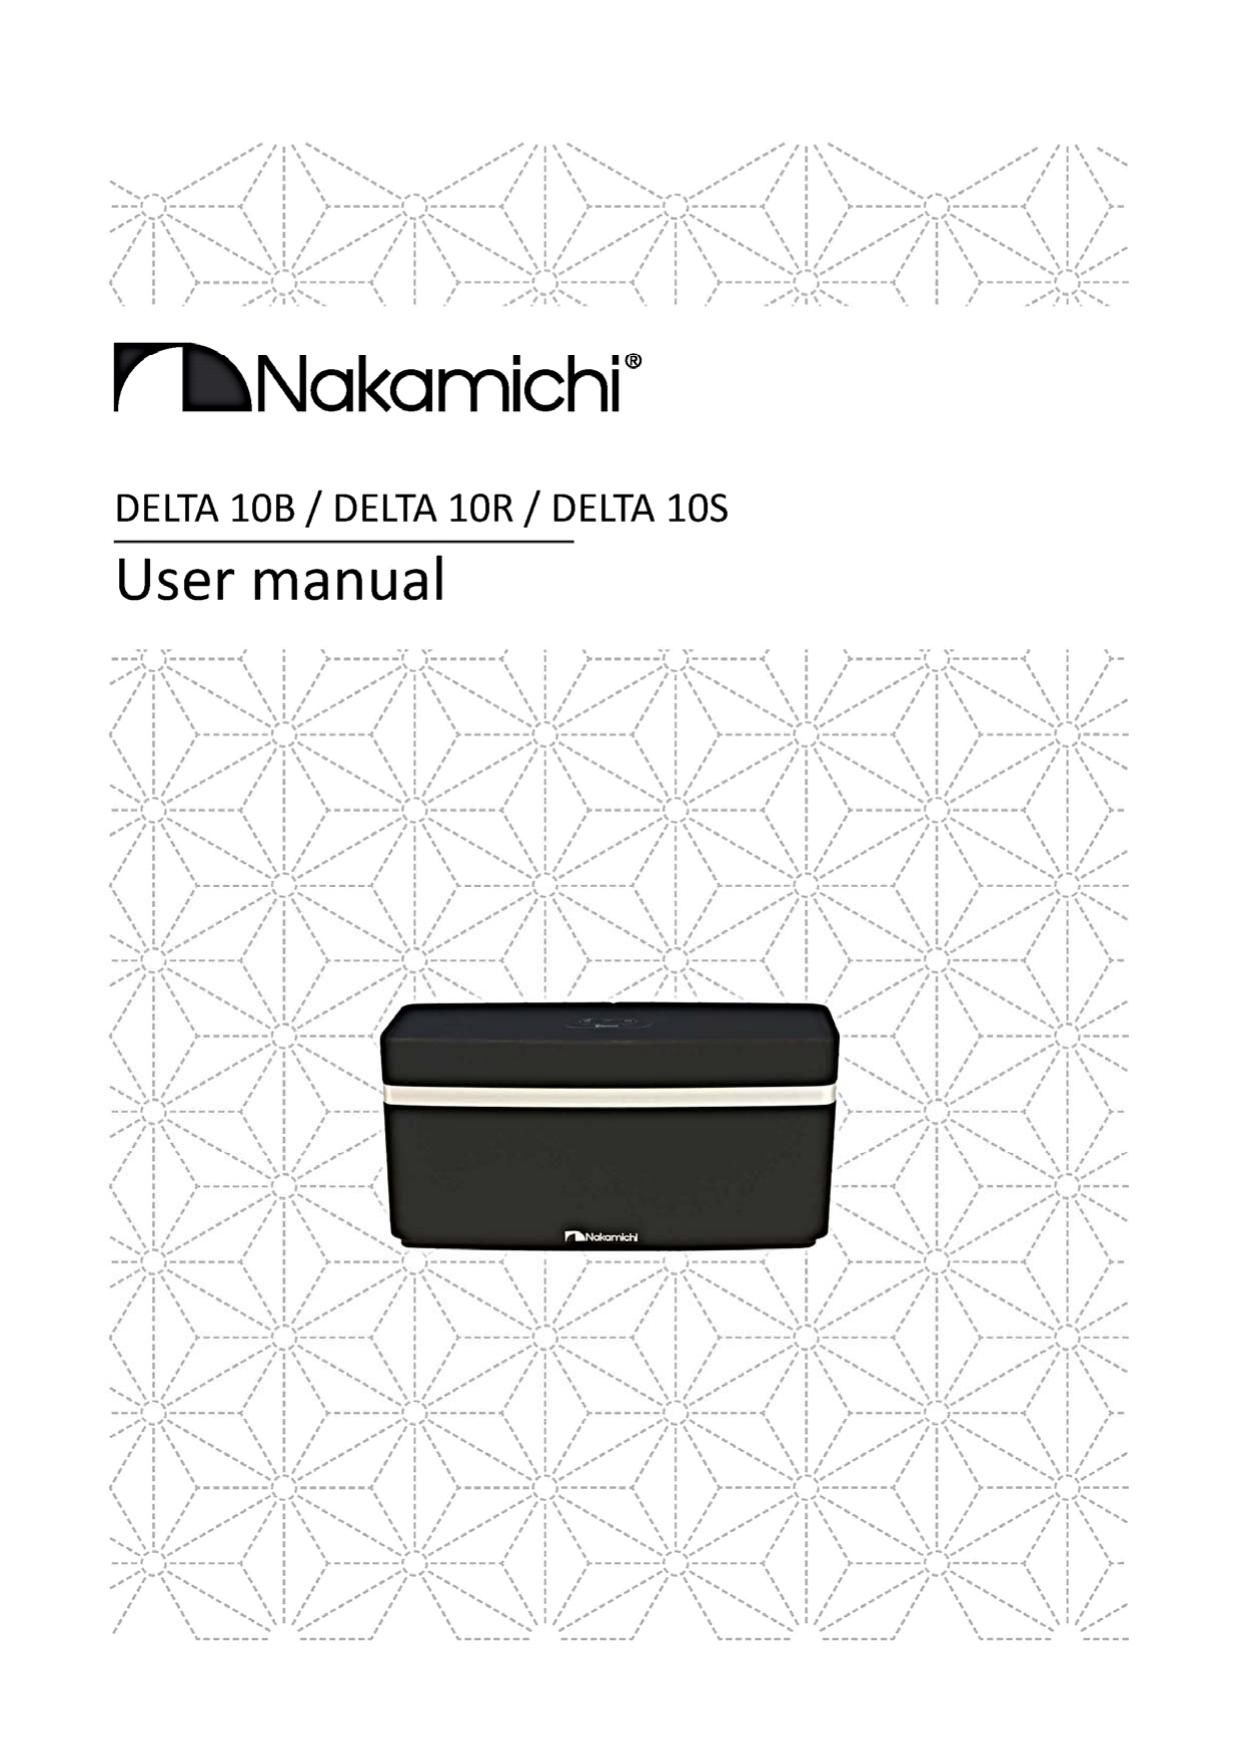 Nakamichi DELTA 10 S Owners Manual